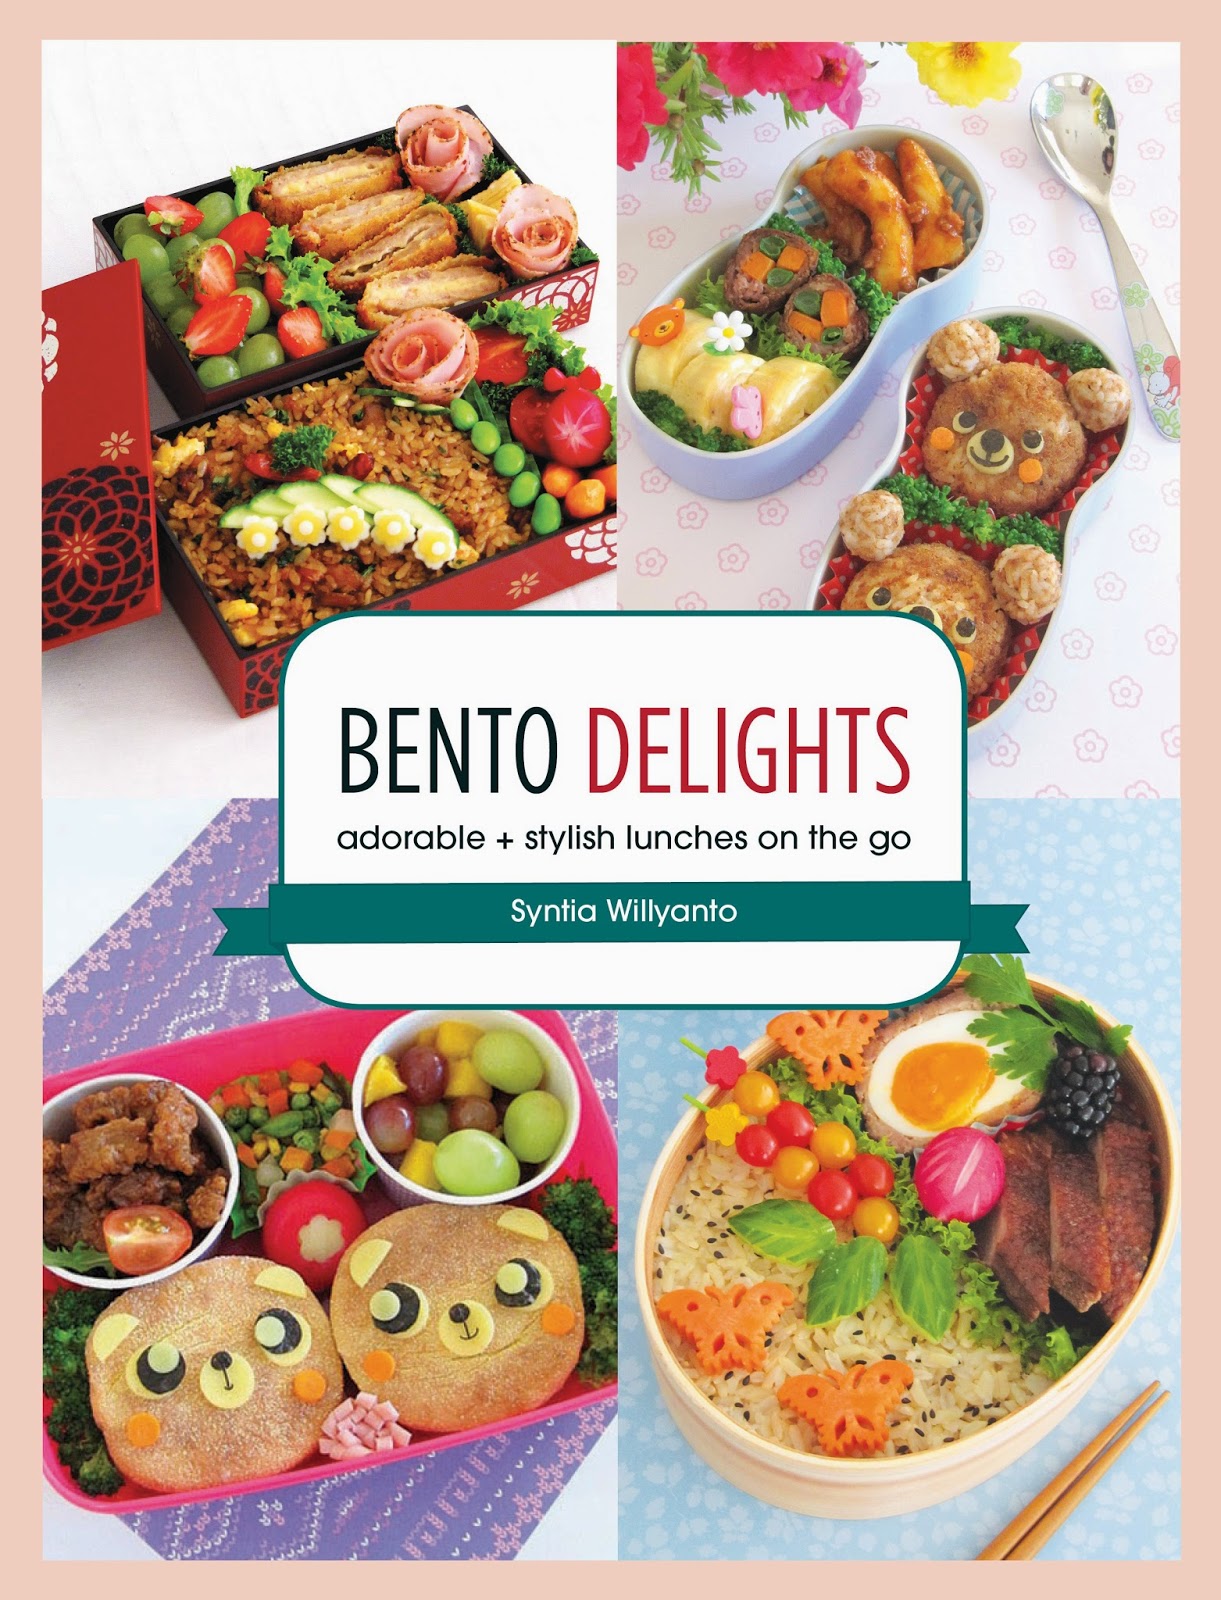 Kawaii Sushi & Bento Box Set by Hinkler, Hardcover